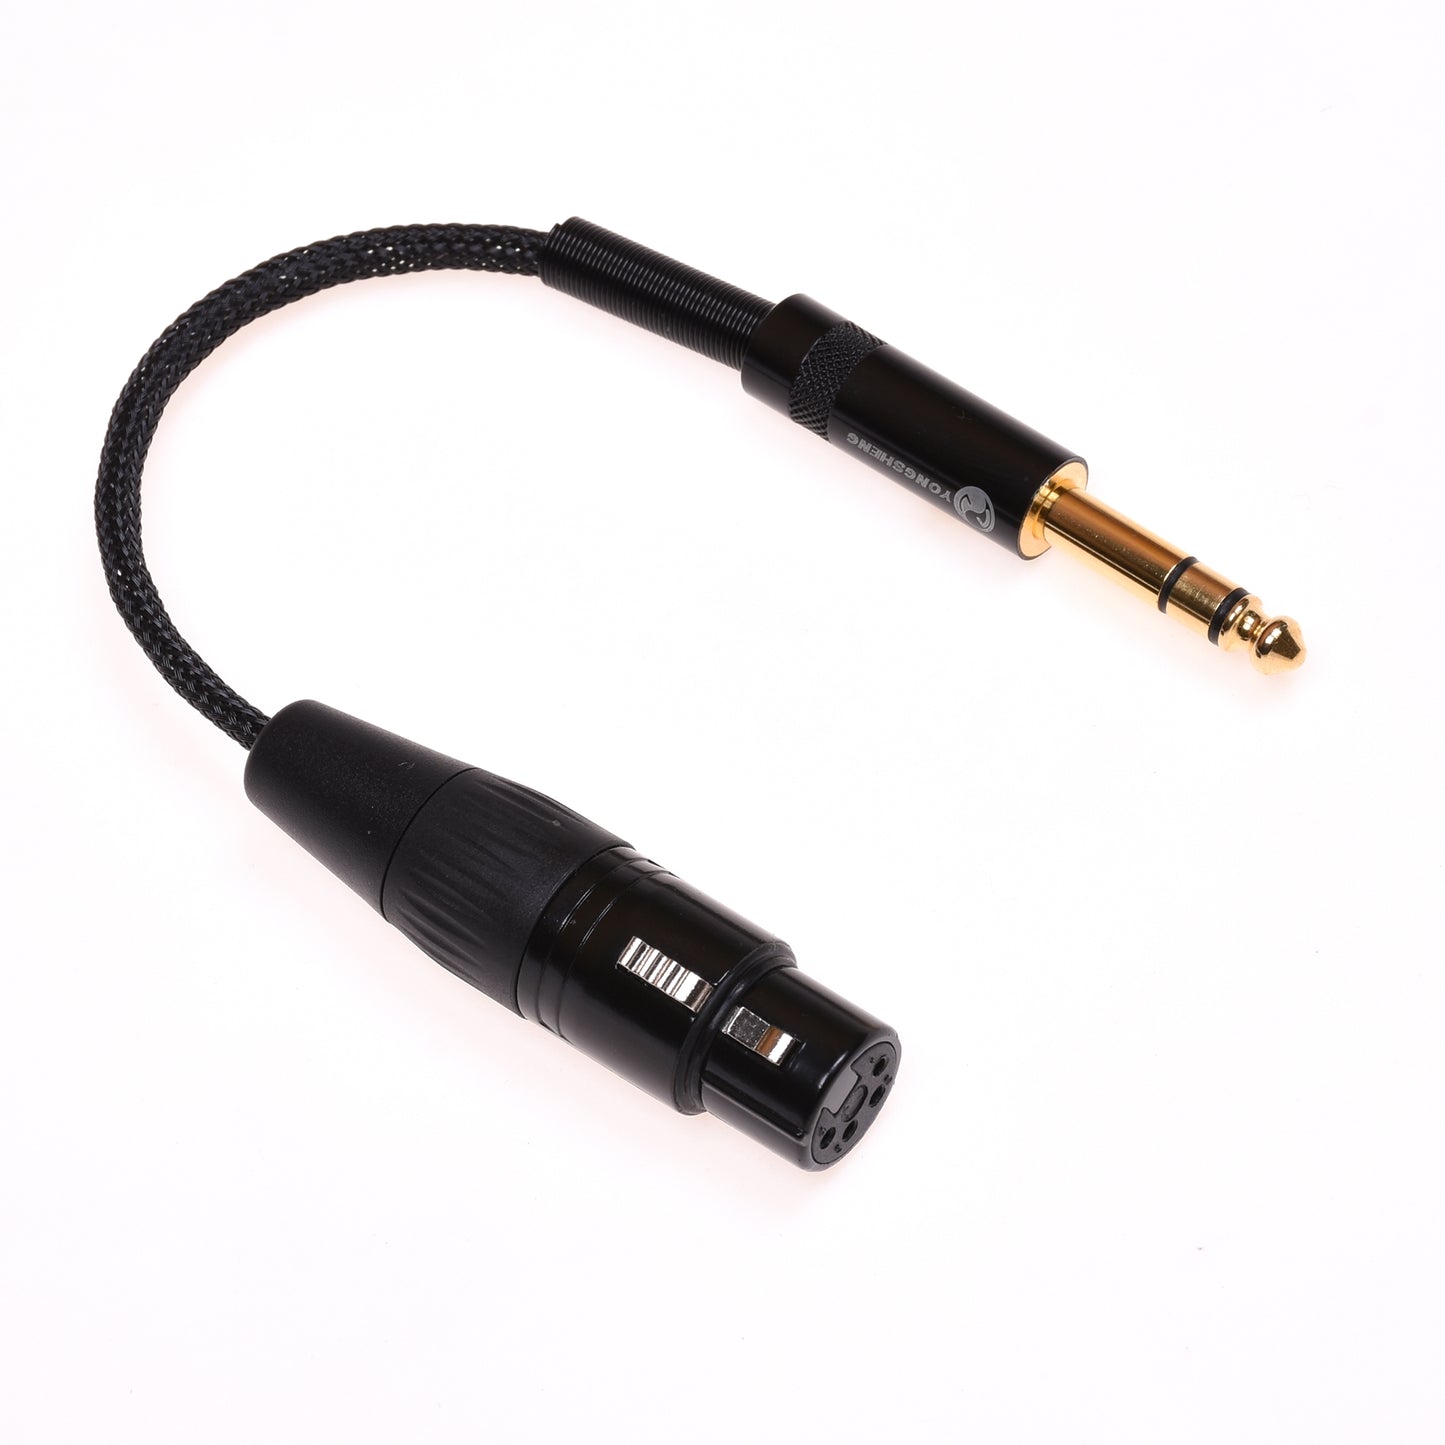 GAGACOCC DIY TRS Audio Adapter 1/4 6.35mm Male to 4-pin XLR Female Balanced Headphone HiFi Cable